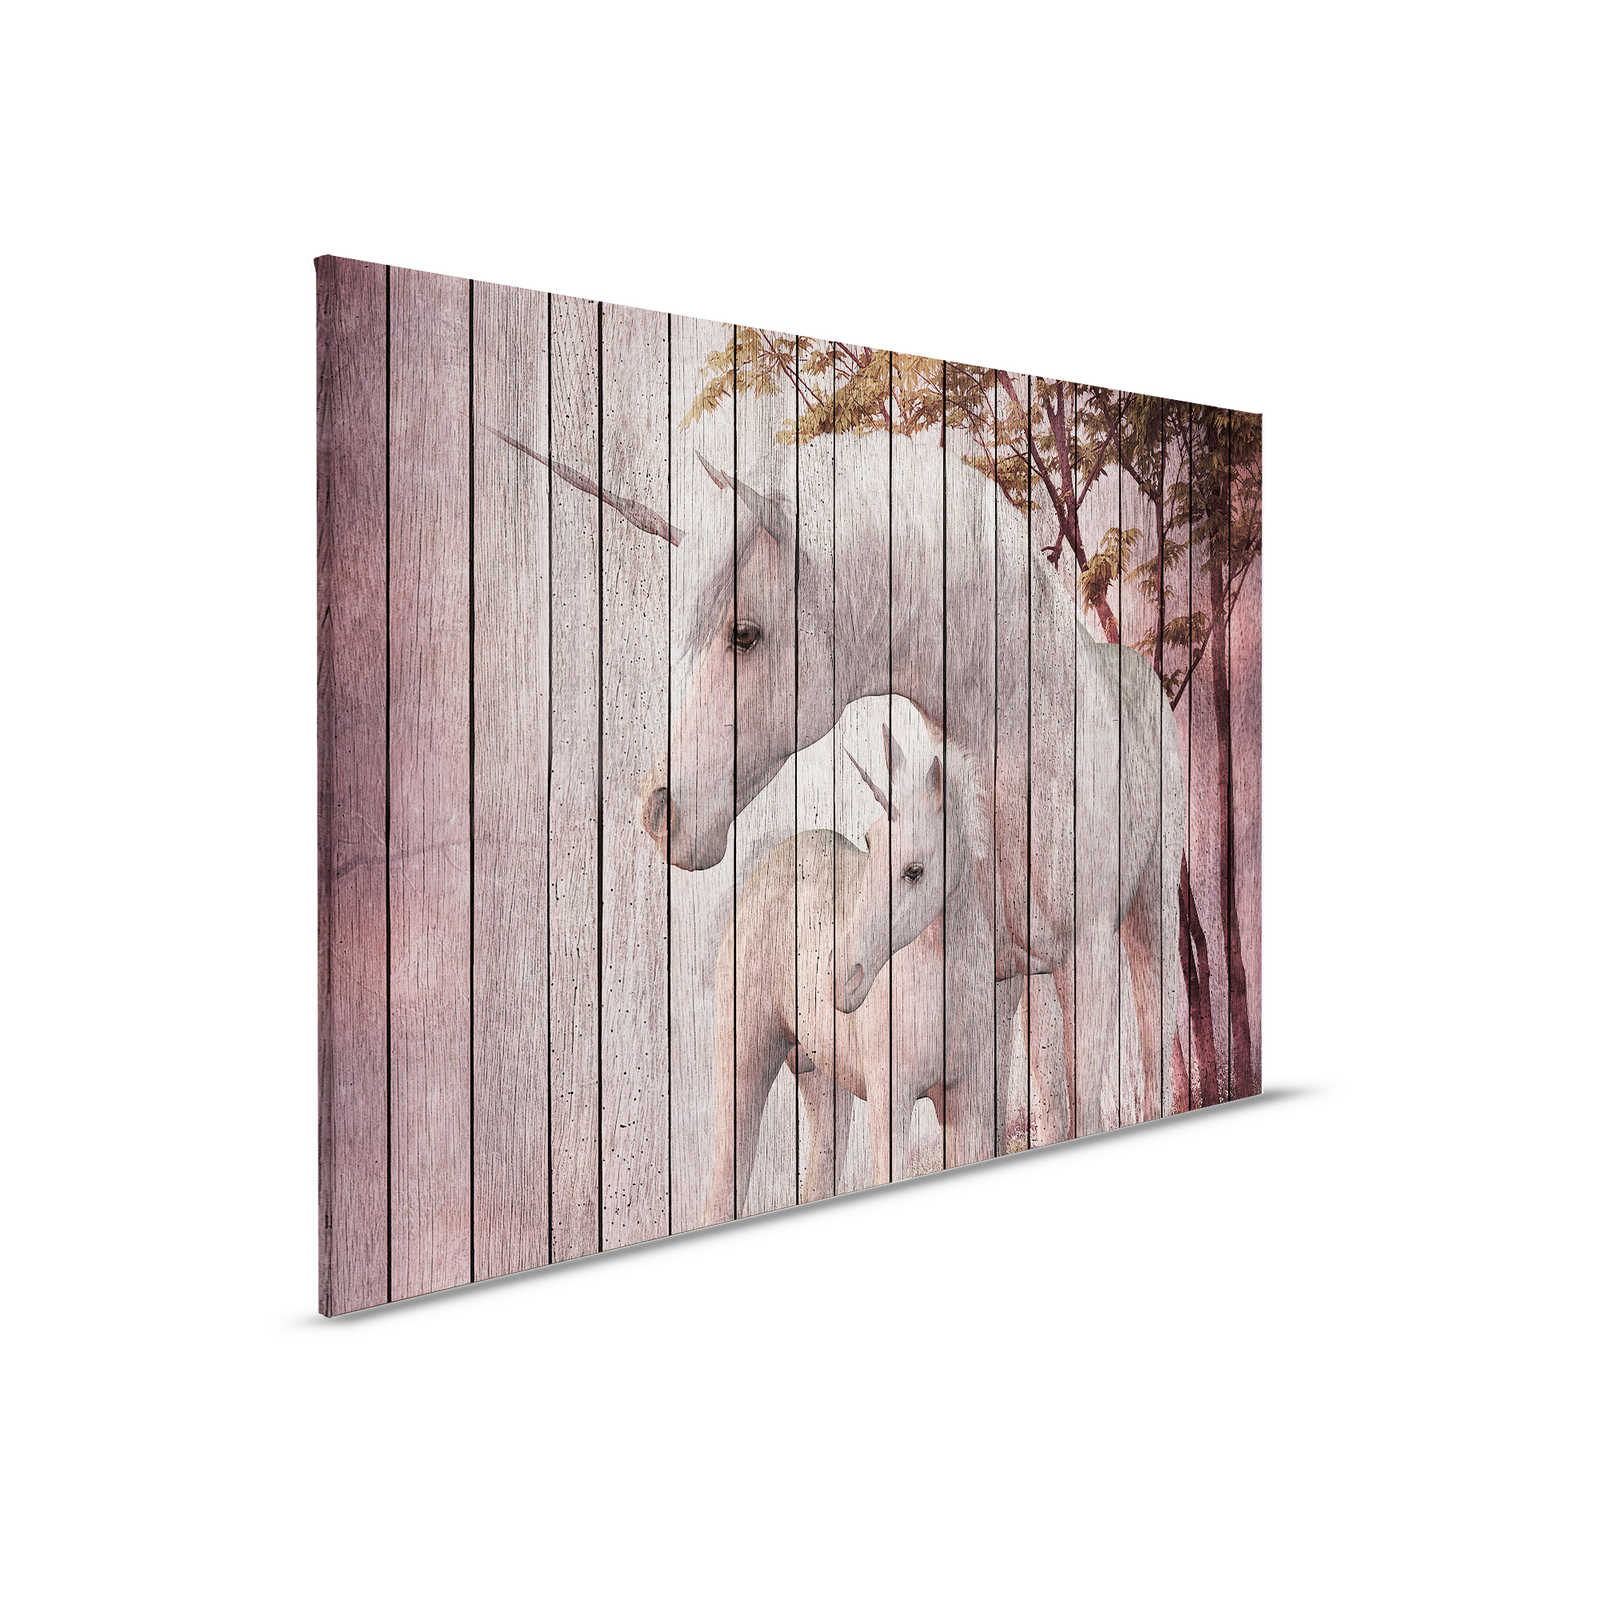         Fantasy 4 - Unicorn & Wood Look Canvas Painting - 0.90 m x 0.60 m
    